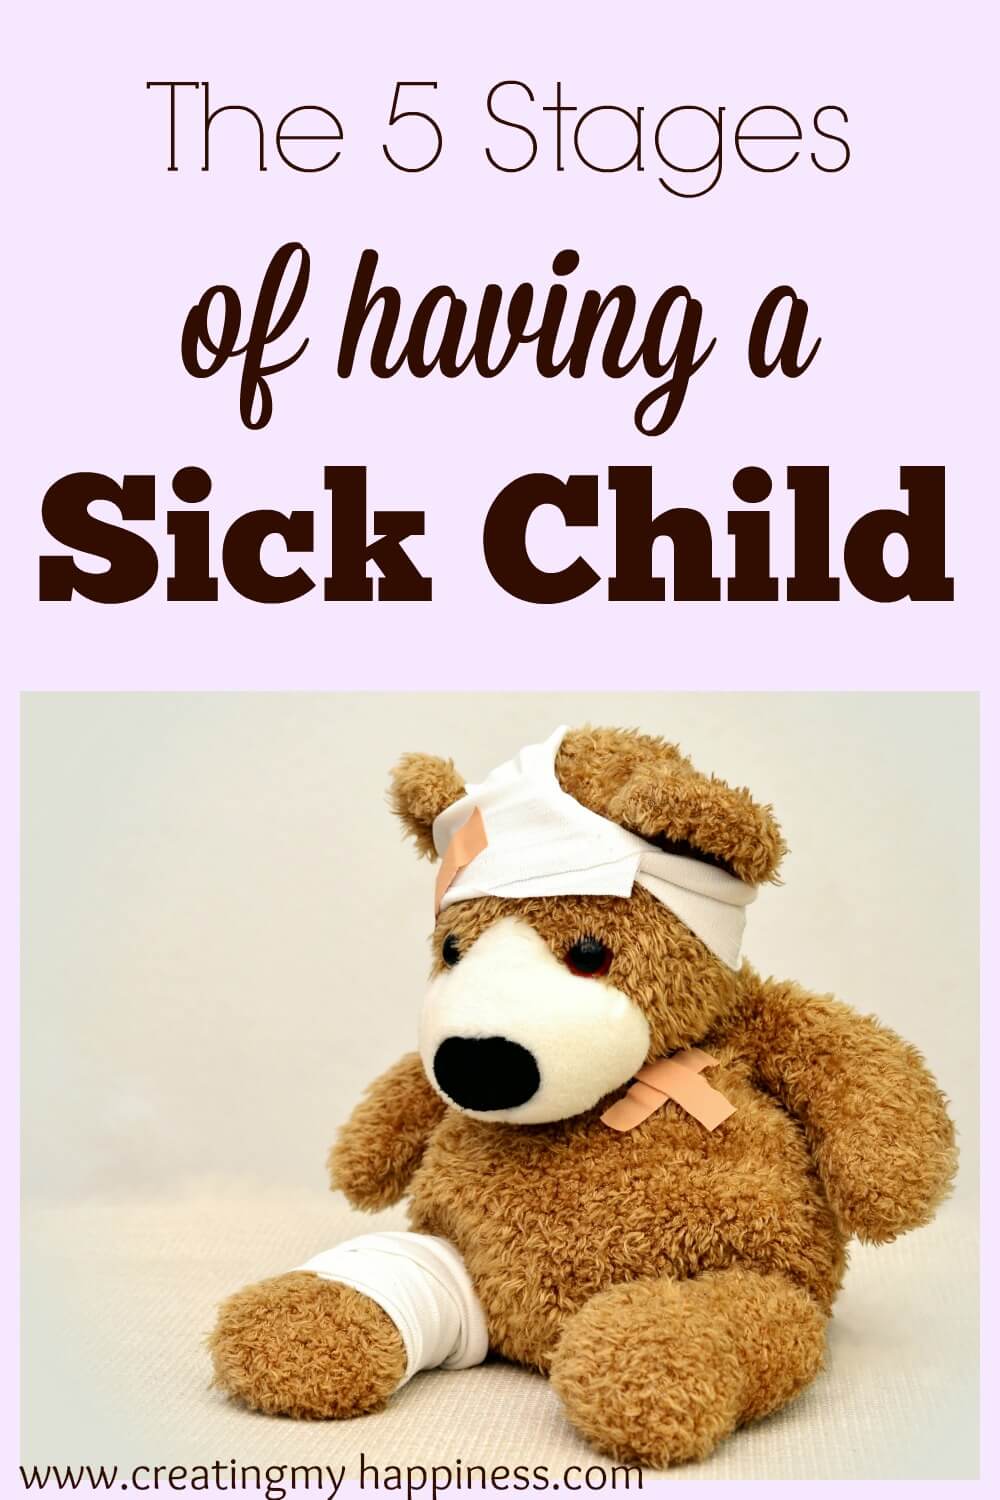 Sick Child 34